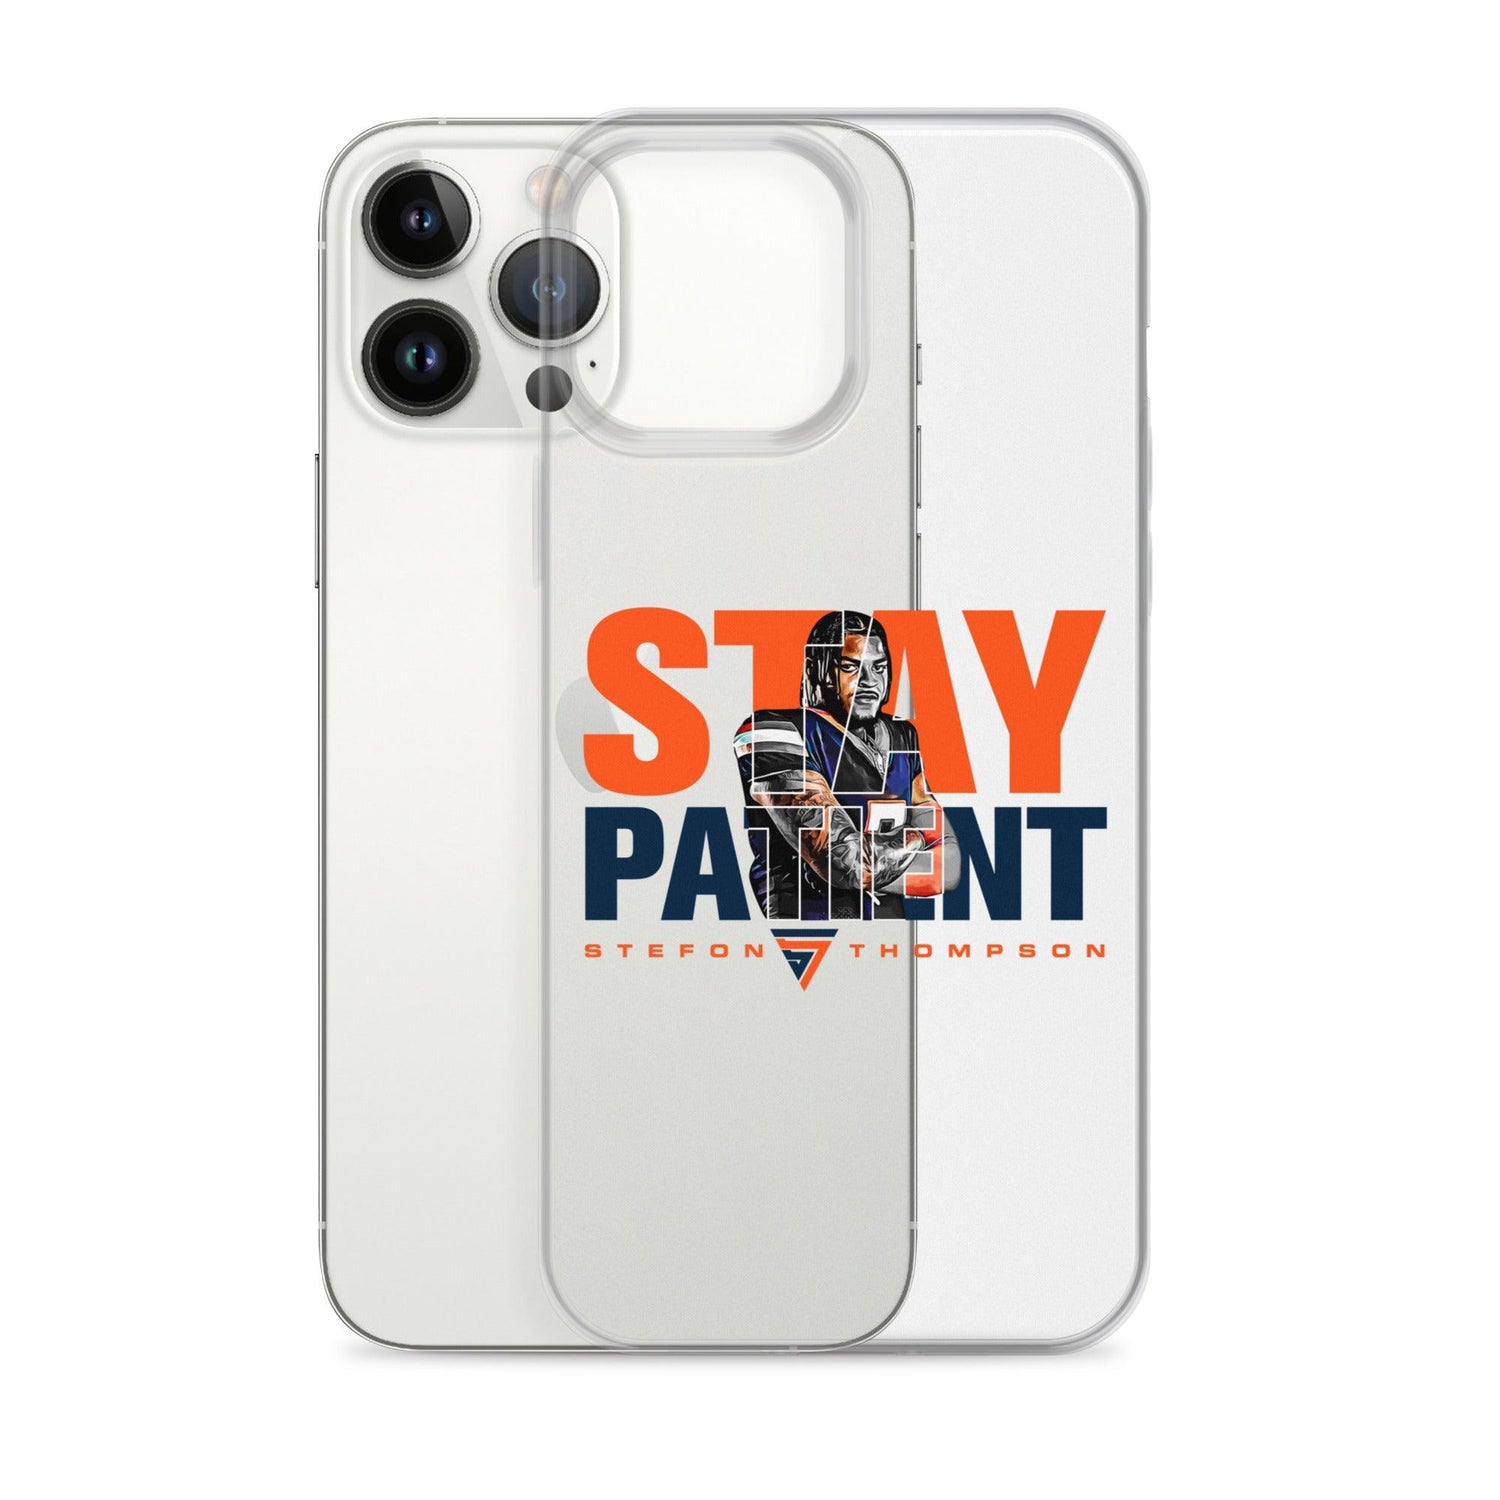 Stefon Thompson "Stay Patient" iPhone Case - Fan Arch